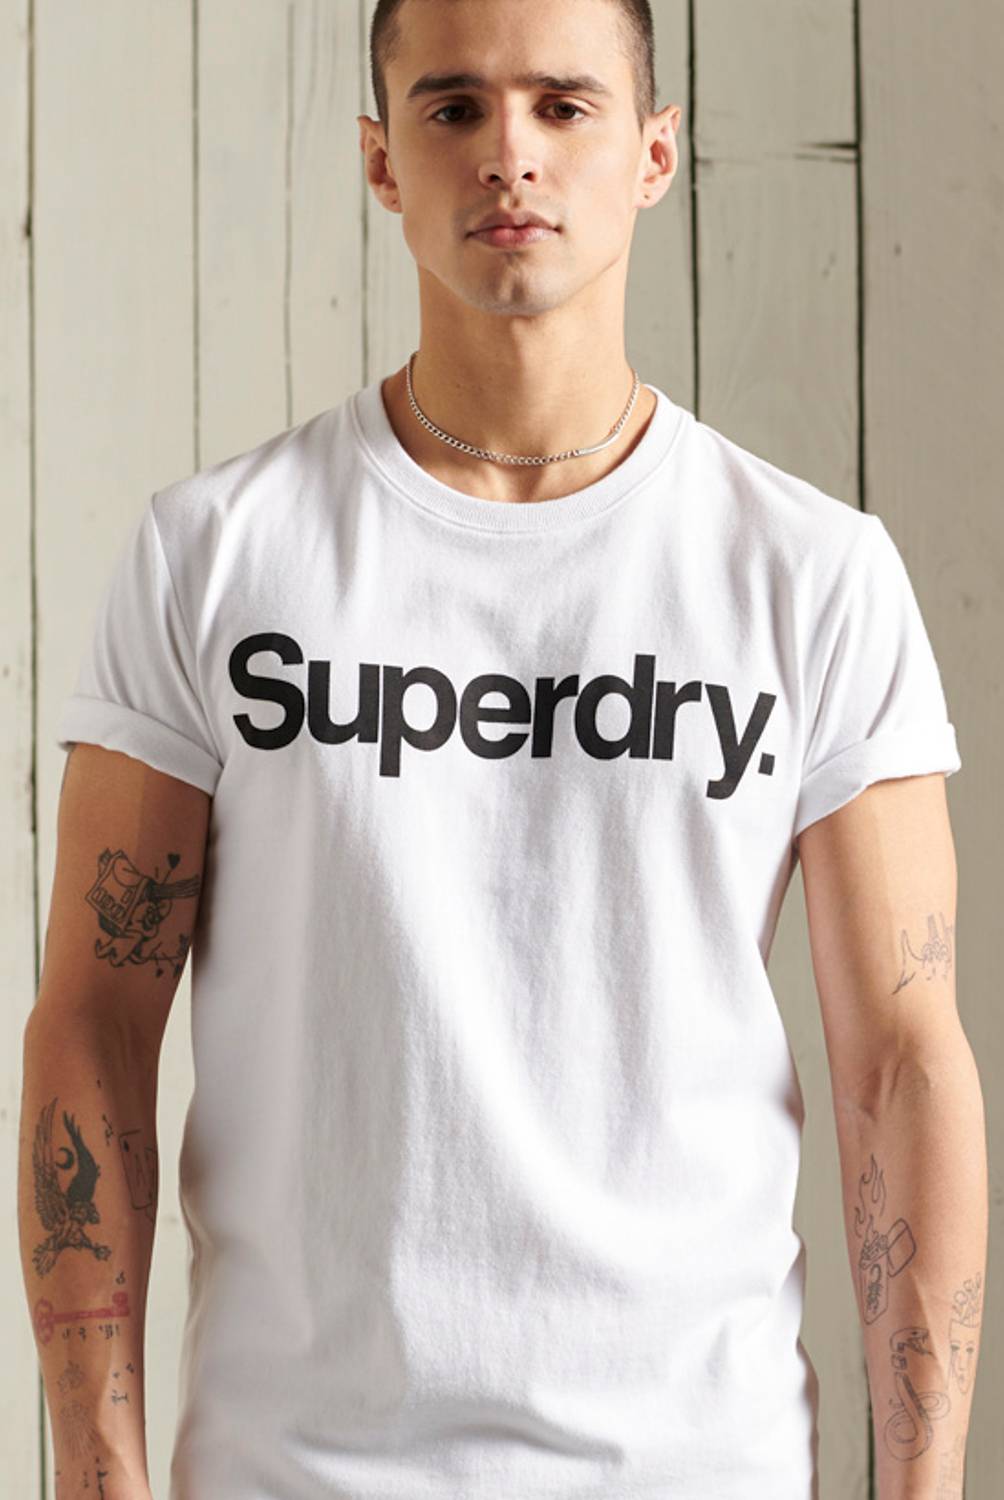 SUPERDRY - Superdry Polera Hombre